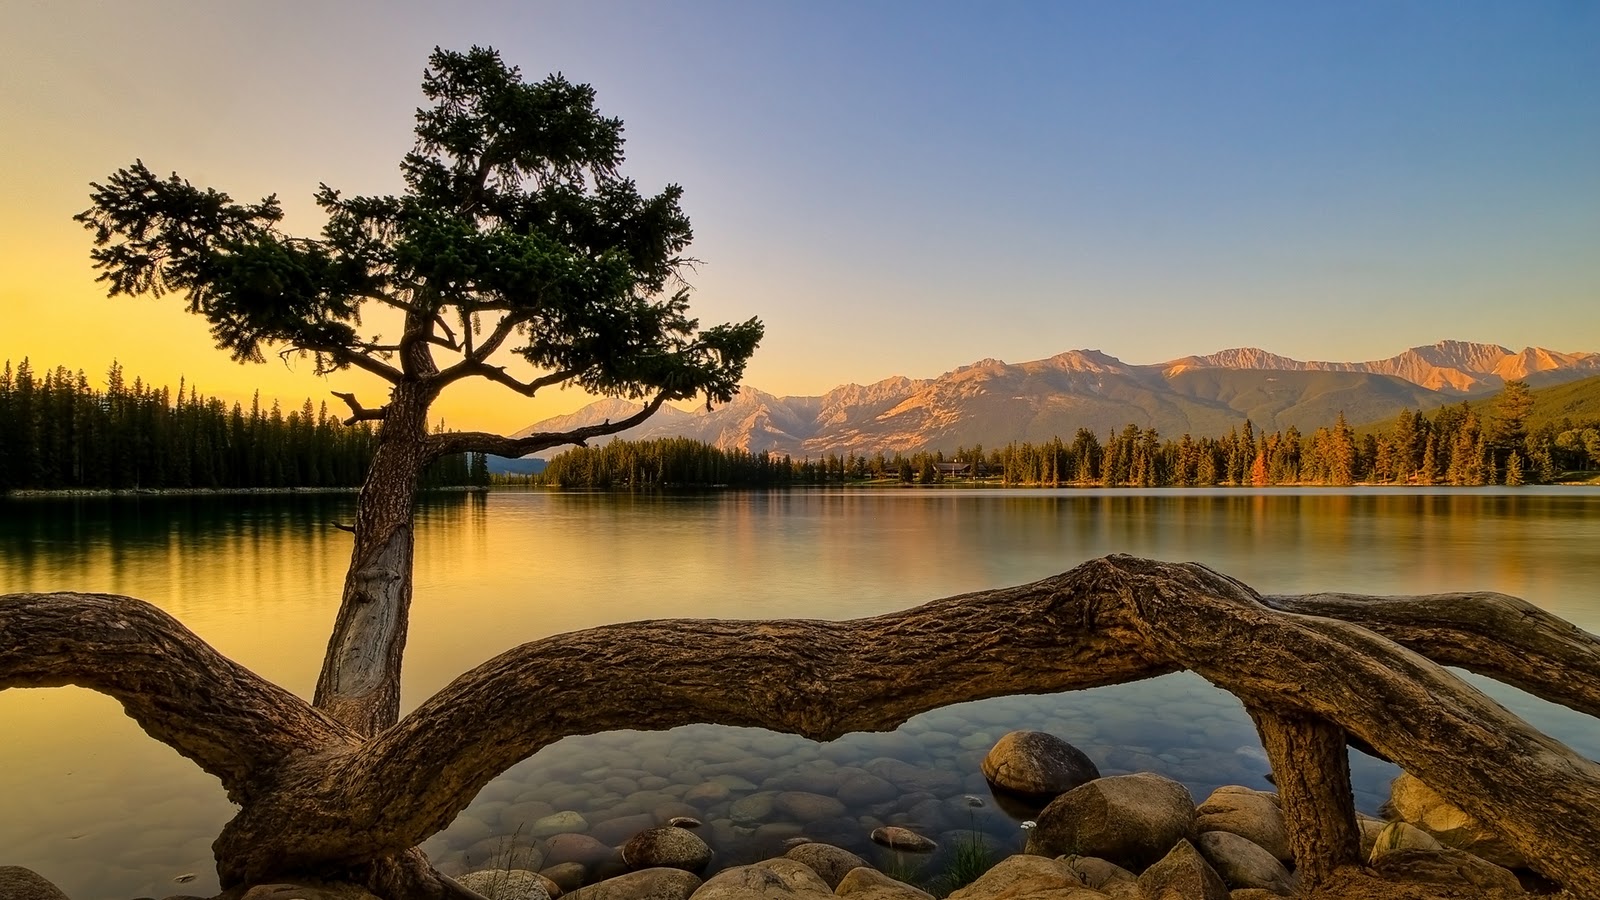 Best Nature Landscapes Wallpaper Image Photos Desktop Background